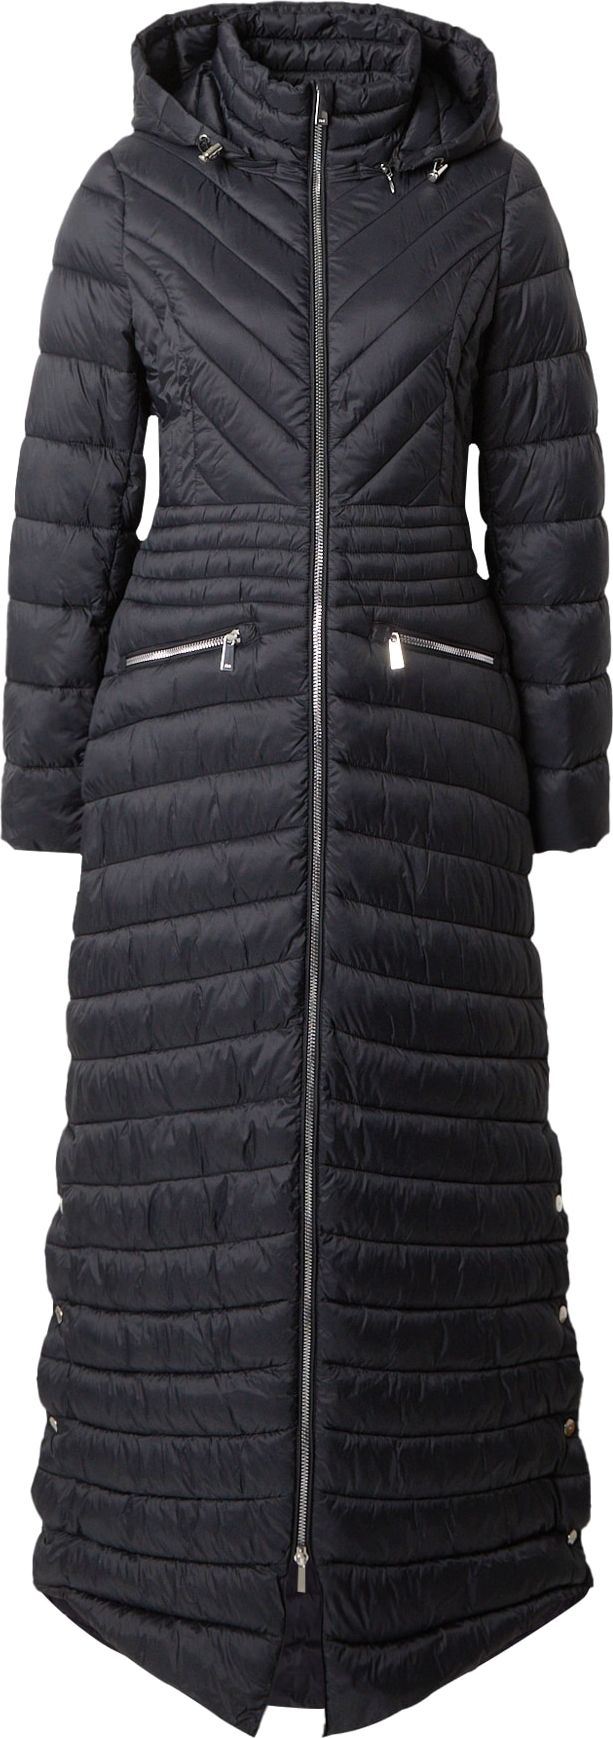 Zimní kabát Karen Millen černá